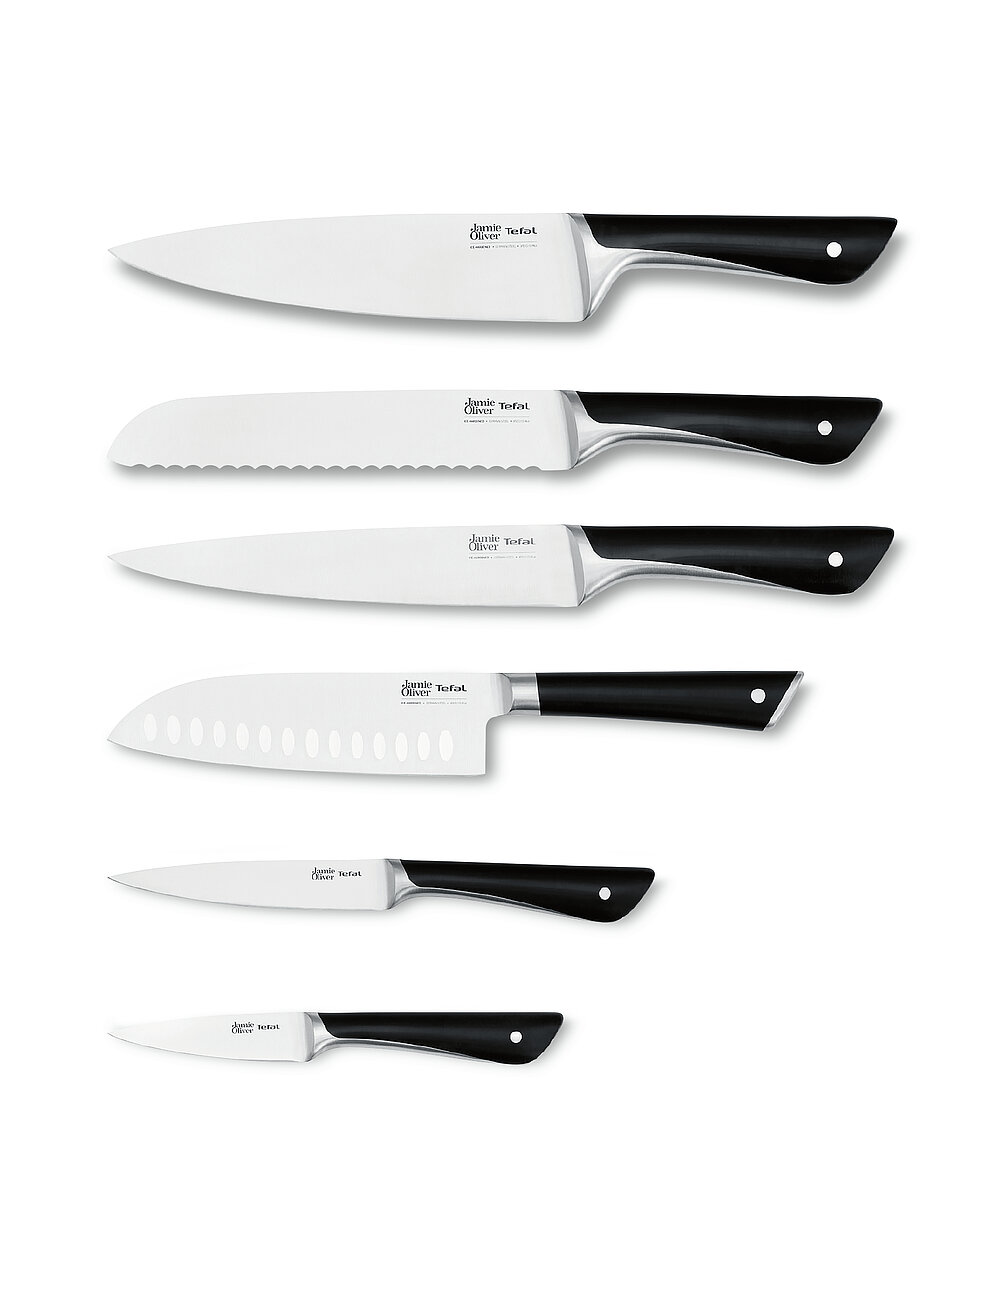 Dot Design Jamie Oliver by Tefal – The Knife Series